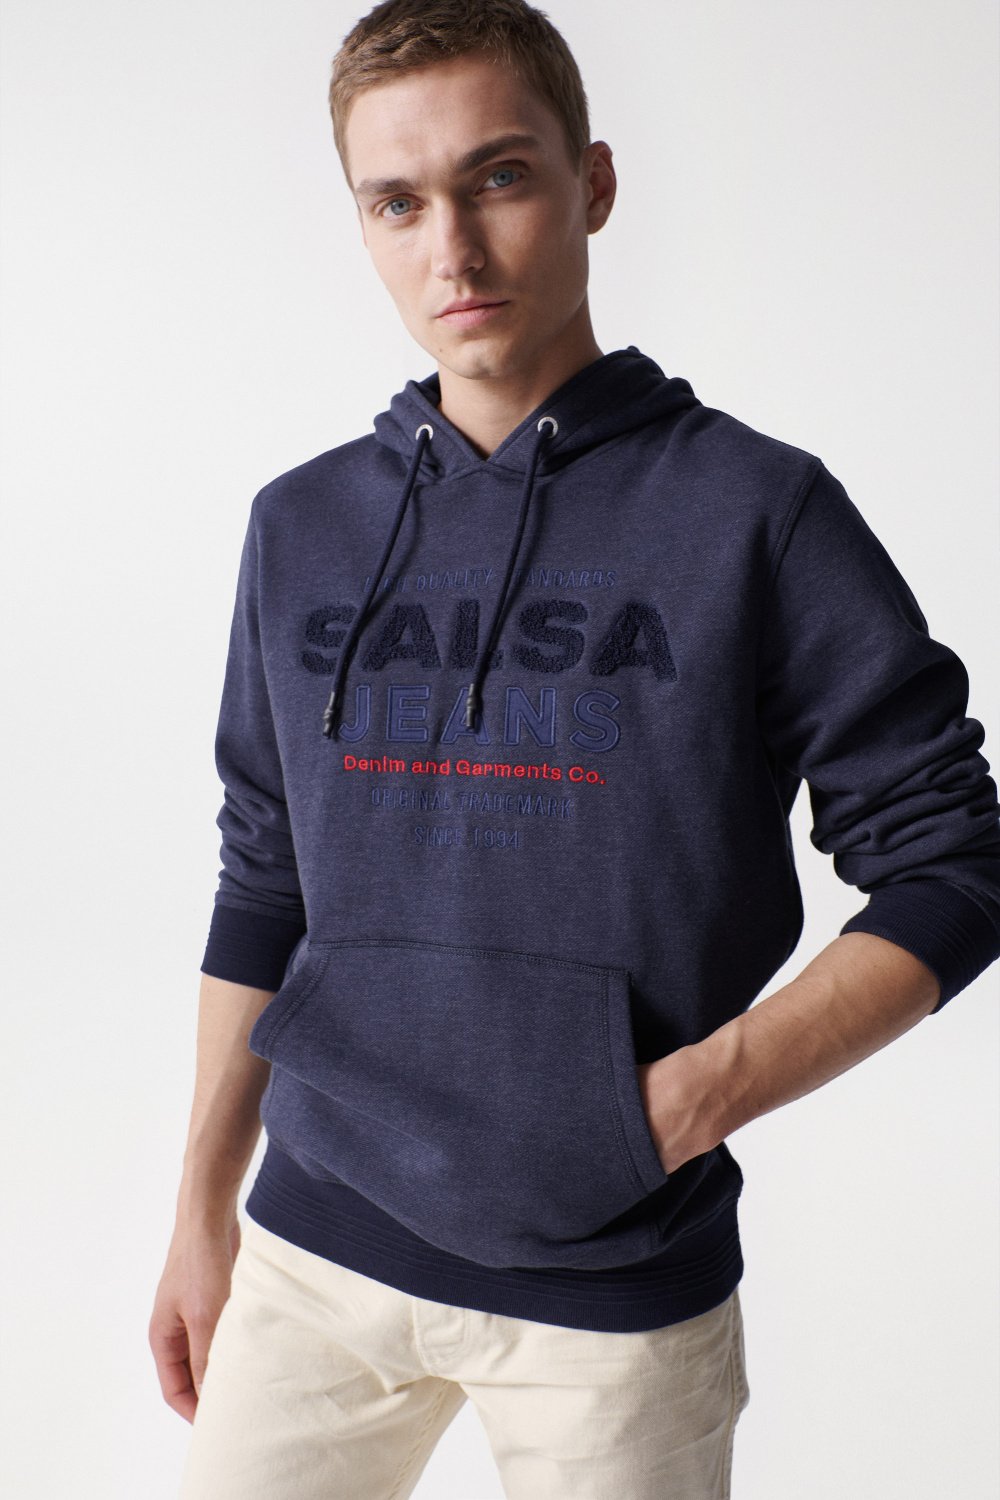 Sweatshirt with Salsa name - Salsa